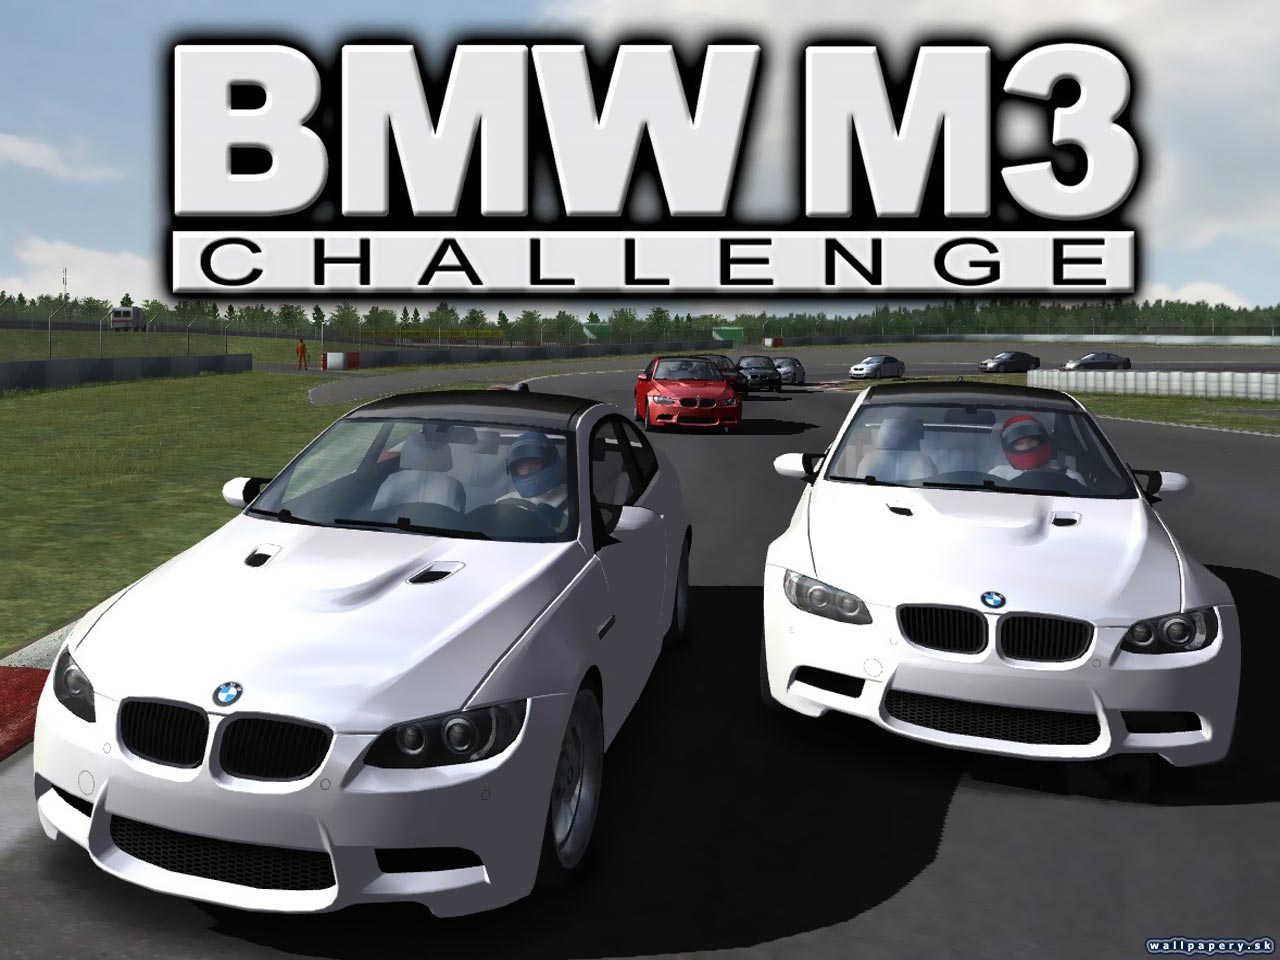 BMW M3 Challenge - wallpaper 15